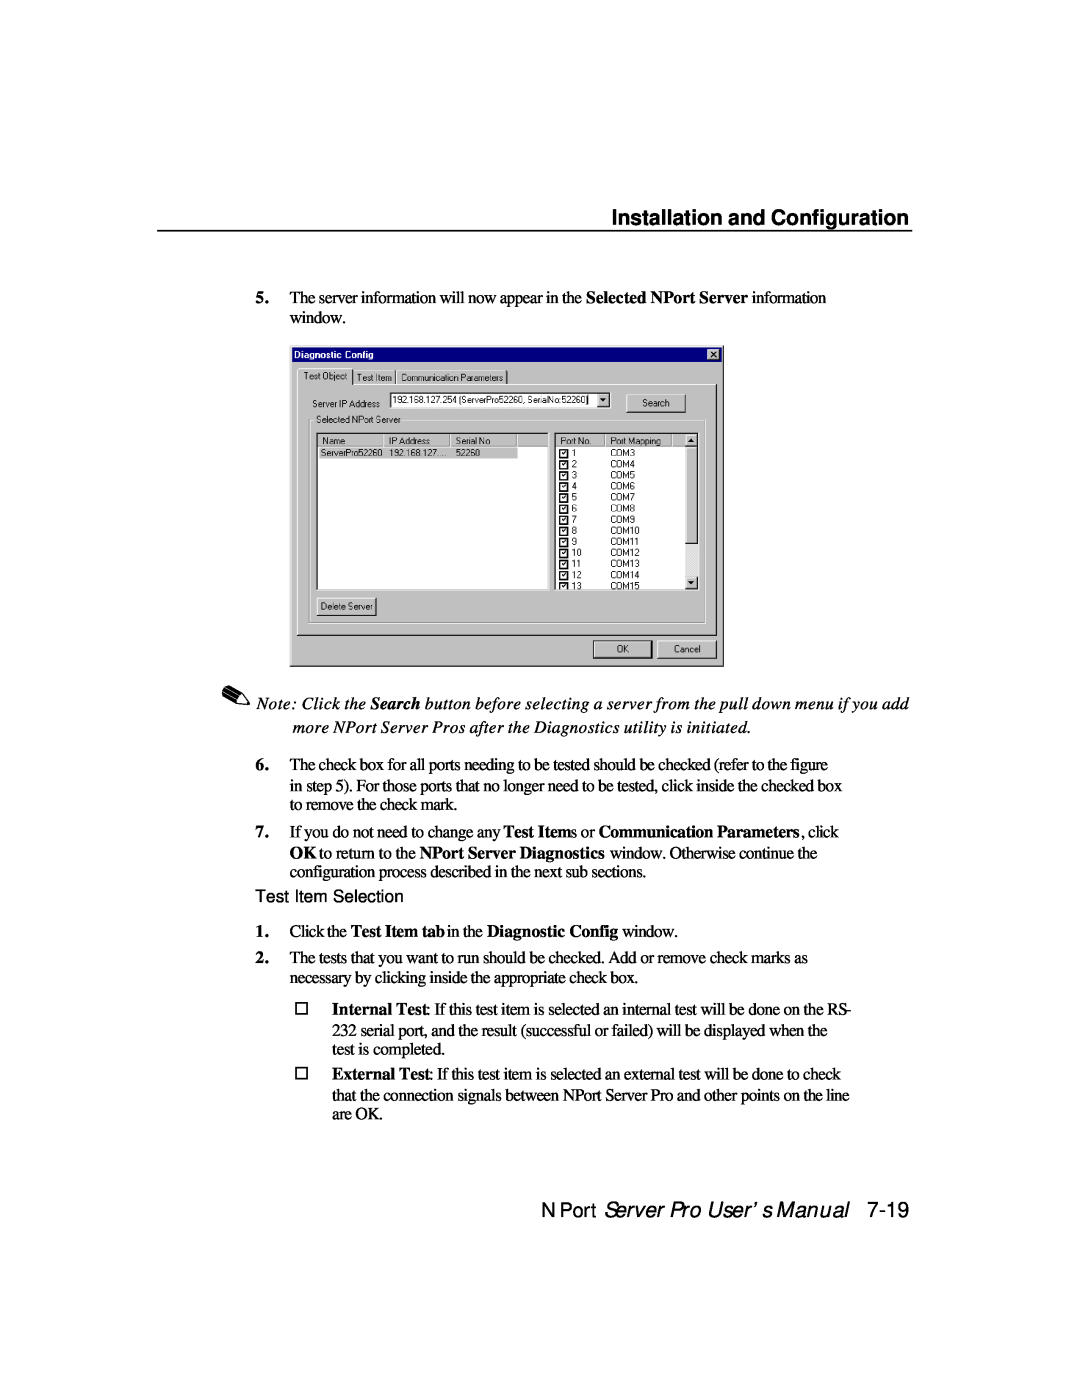 Moxa Technologies DE-308, DE-303 manual Installation and Configuration, NPort Server Pro User’s Manual, Test Item Selection 